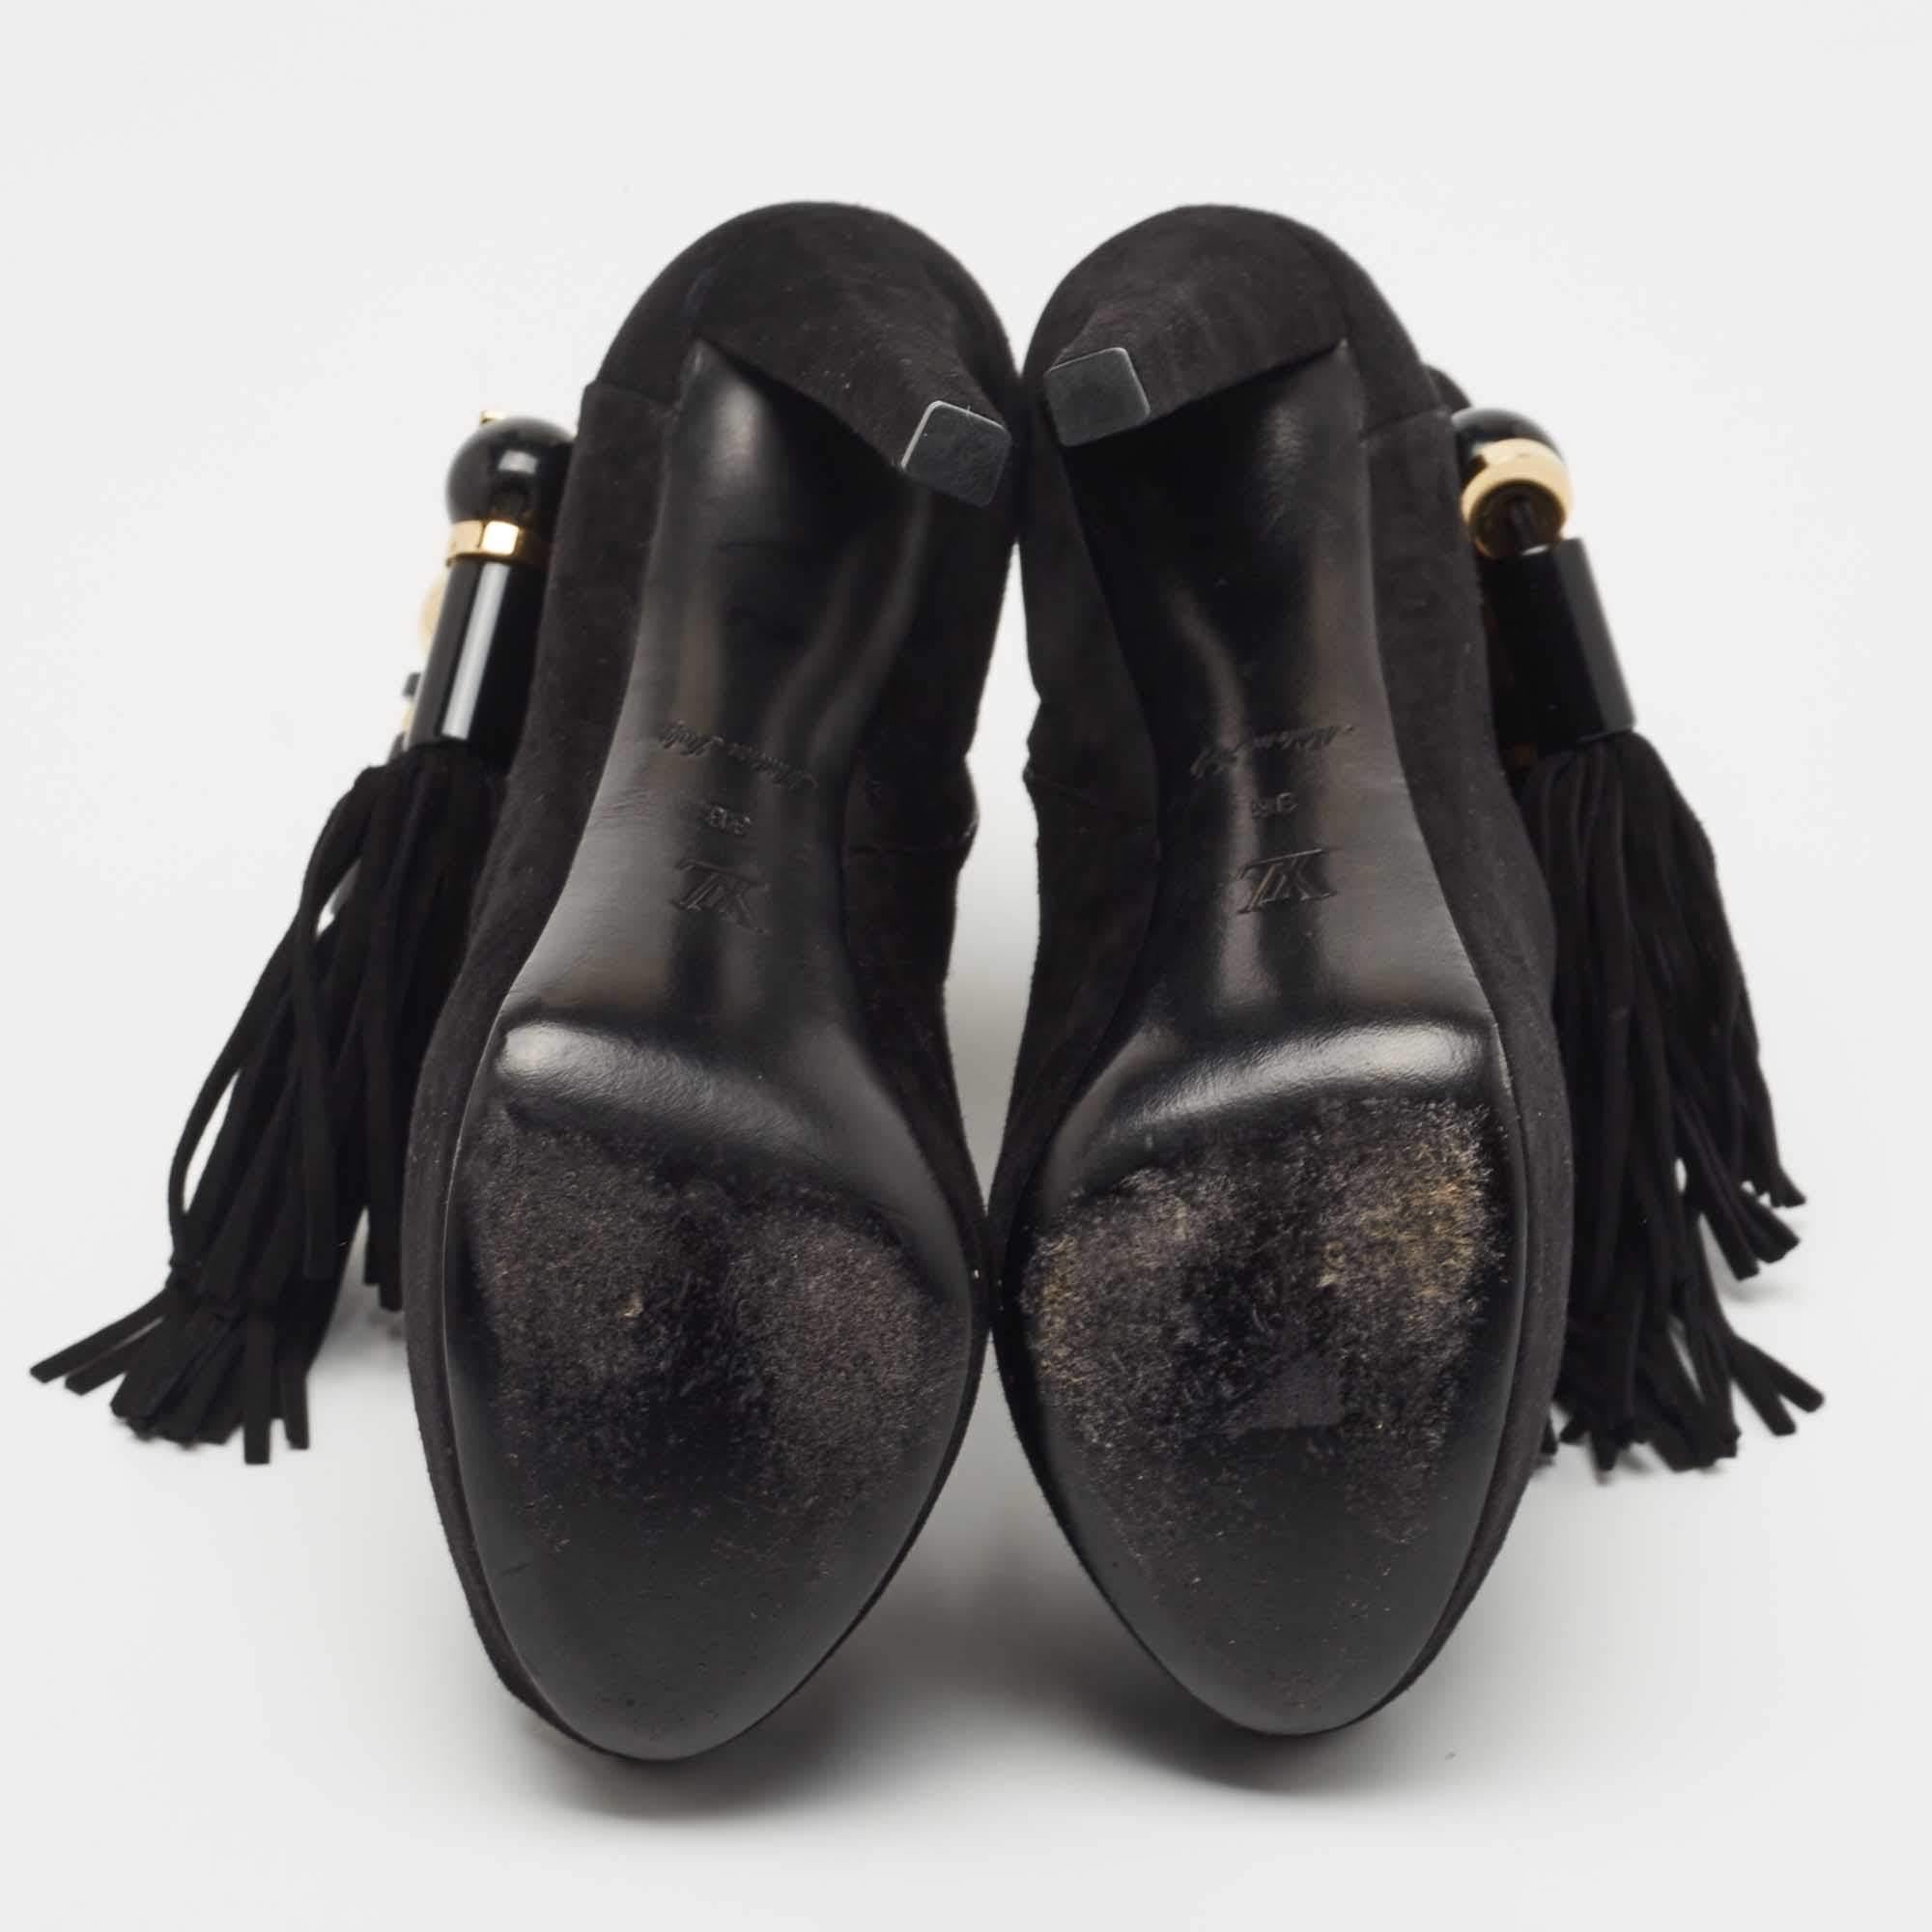 Louis Vuitton Black Suede Tassel Peep Toe Ankle Booties Size 38 3